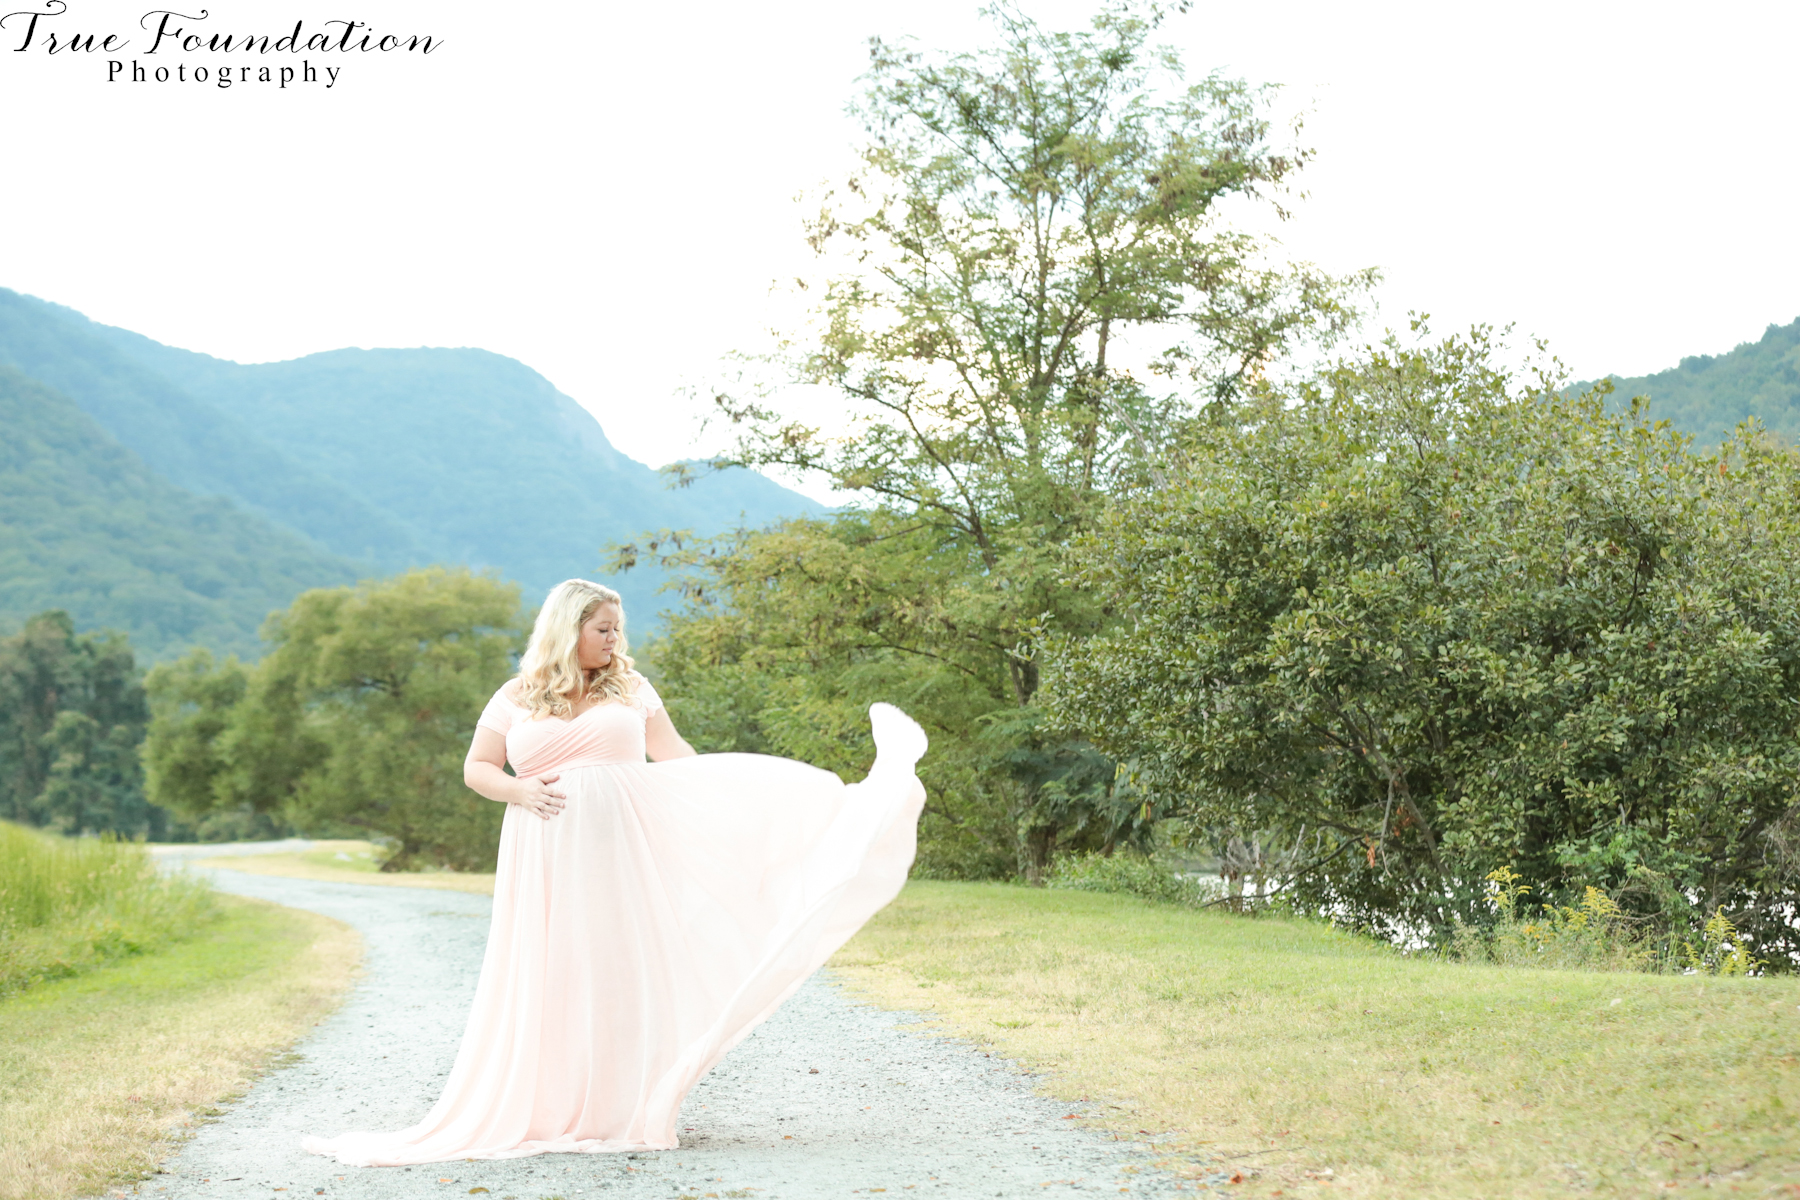 hendersonville-nc-maternity-photography-photographers-so-trendy-dress-mountain-views-33